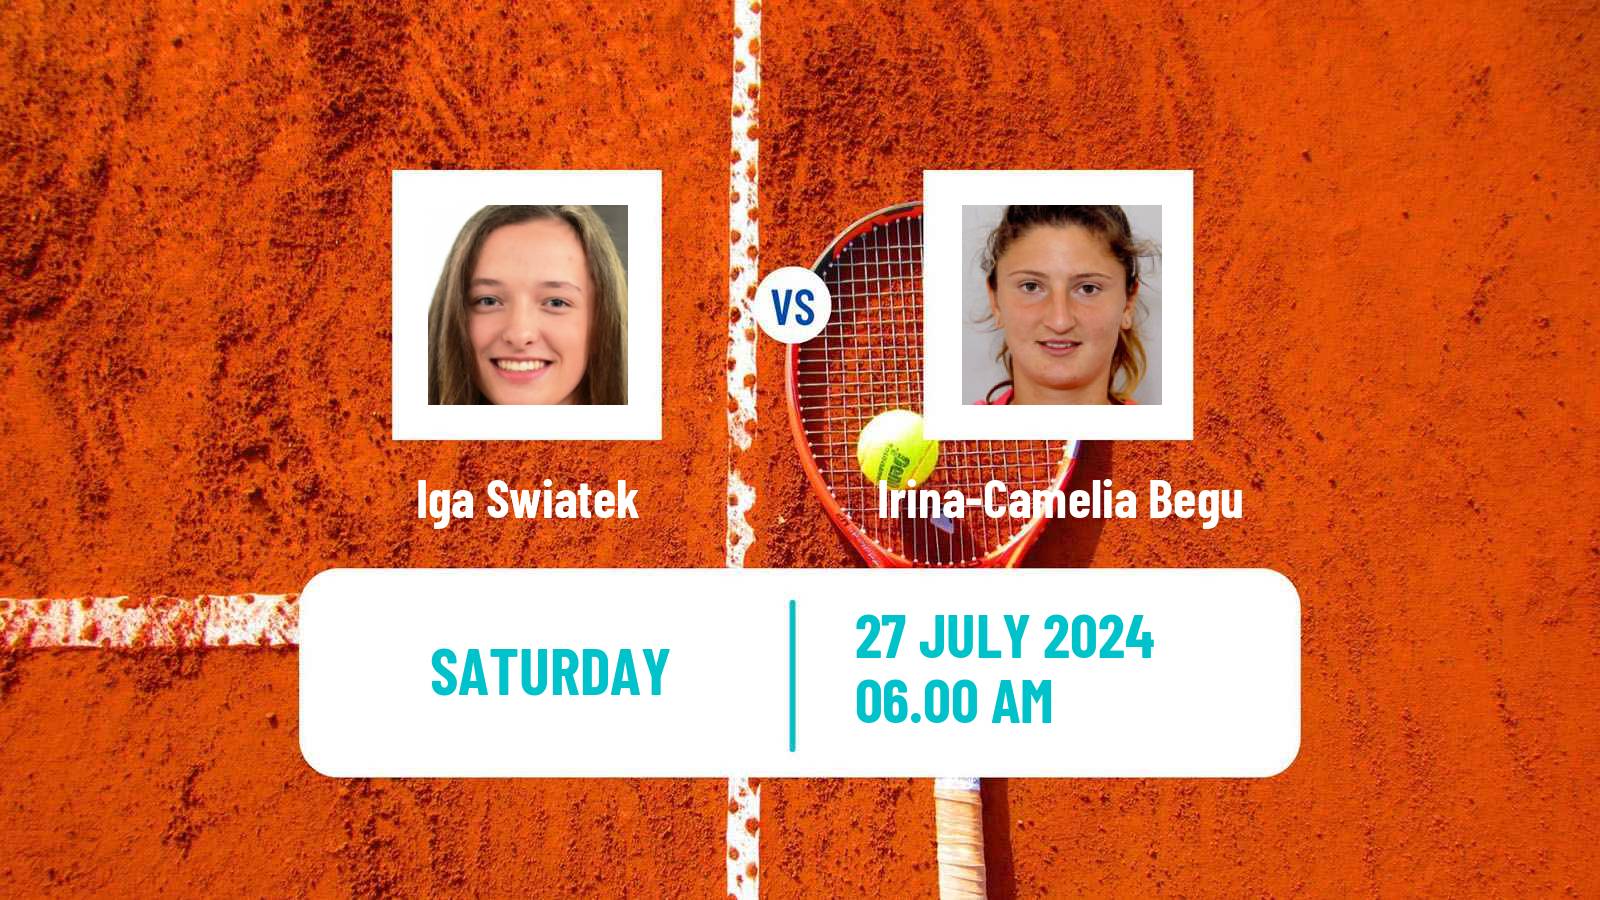 Tennis WTA Olympic Games Iga Swiatek - Irina-Camelia Begu